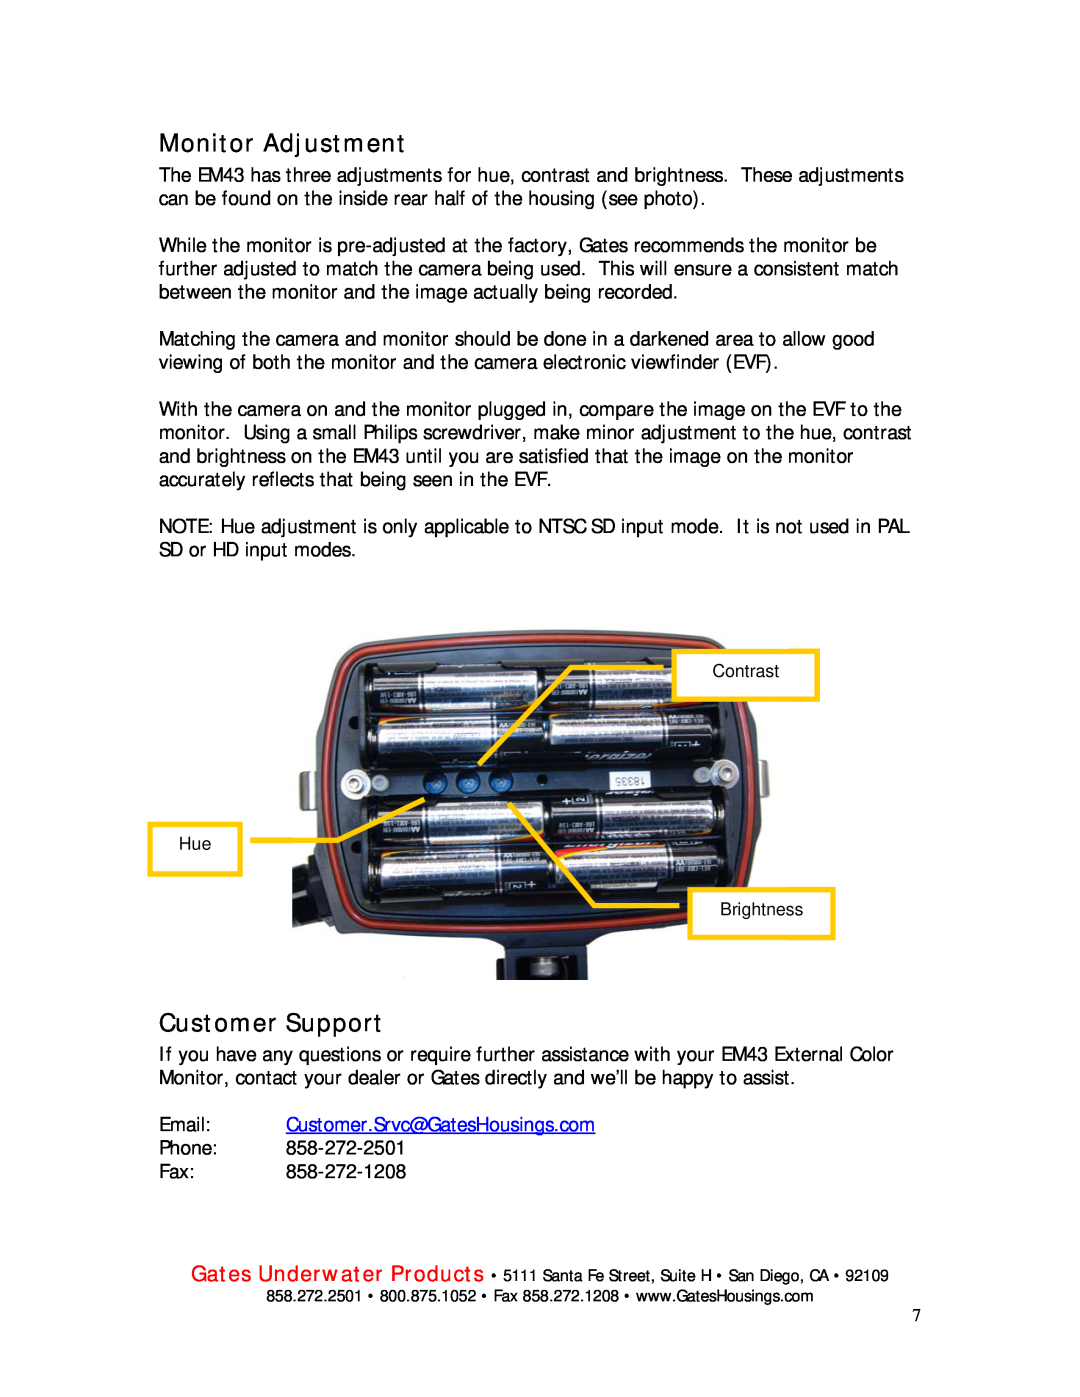 Philips EM43 manual Monitor Adjustment, Customer Support, Email Customer.Srvc@GatesHousings.com 